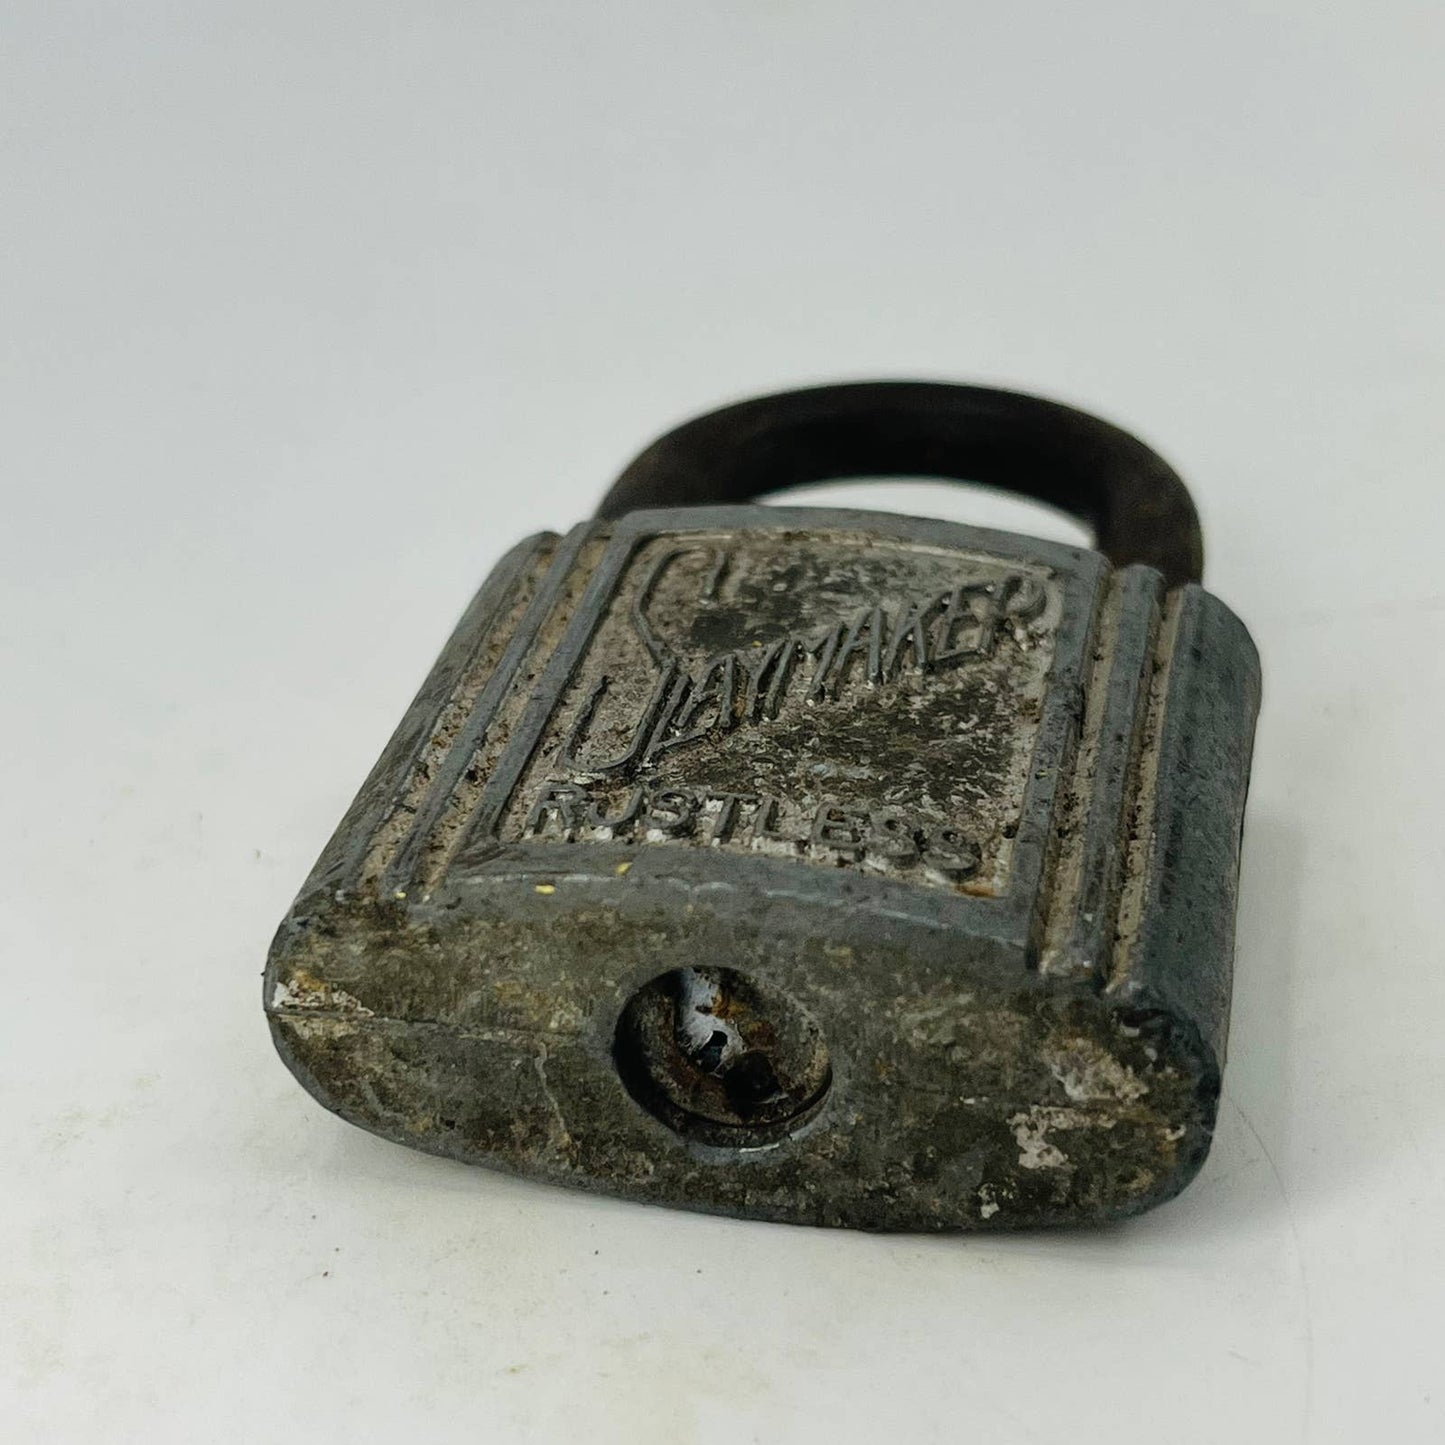 Vintage Art Deco Slaymaker Rustless Lock Padlock No Key SA8-a2